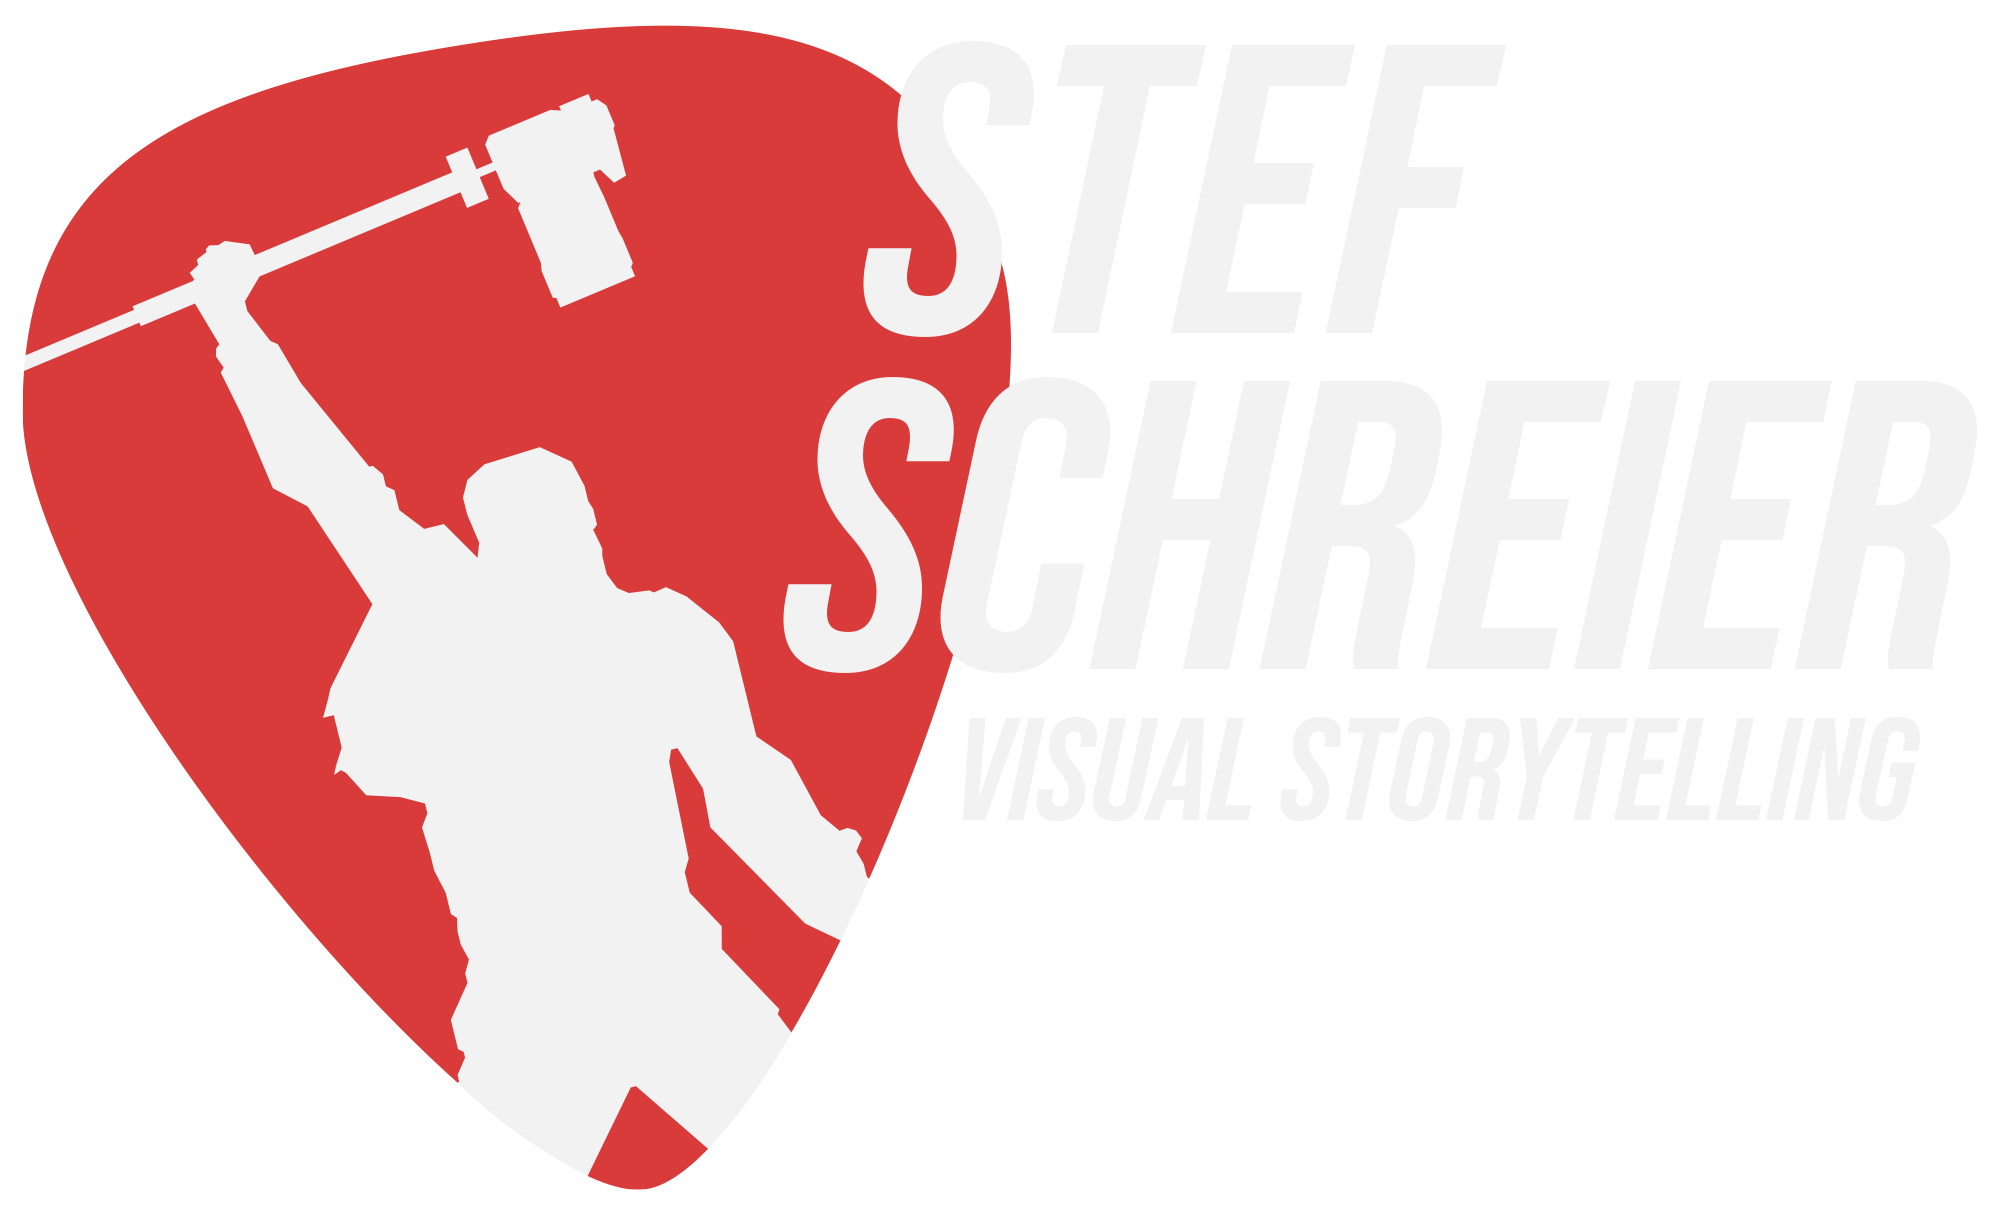 Stefan Schreier / Visual Storytelling